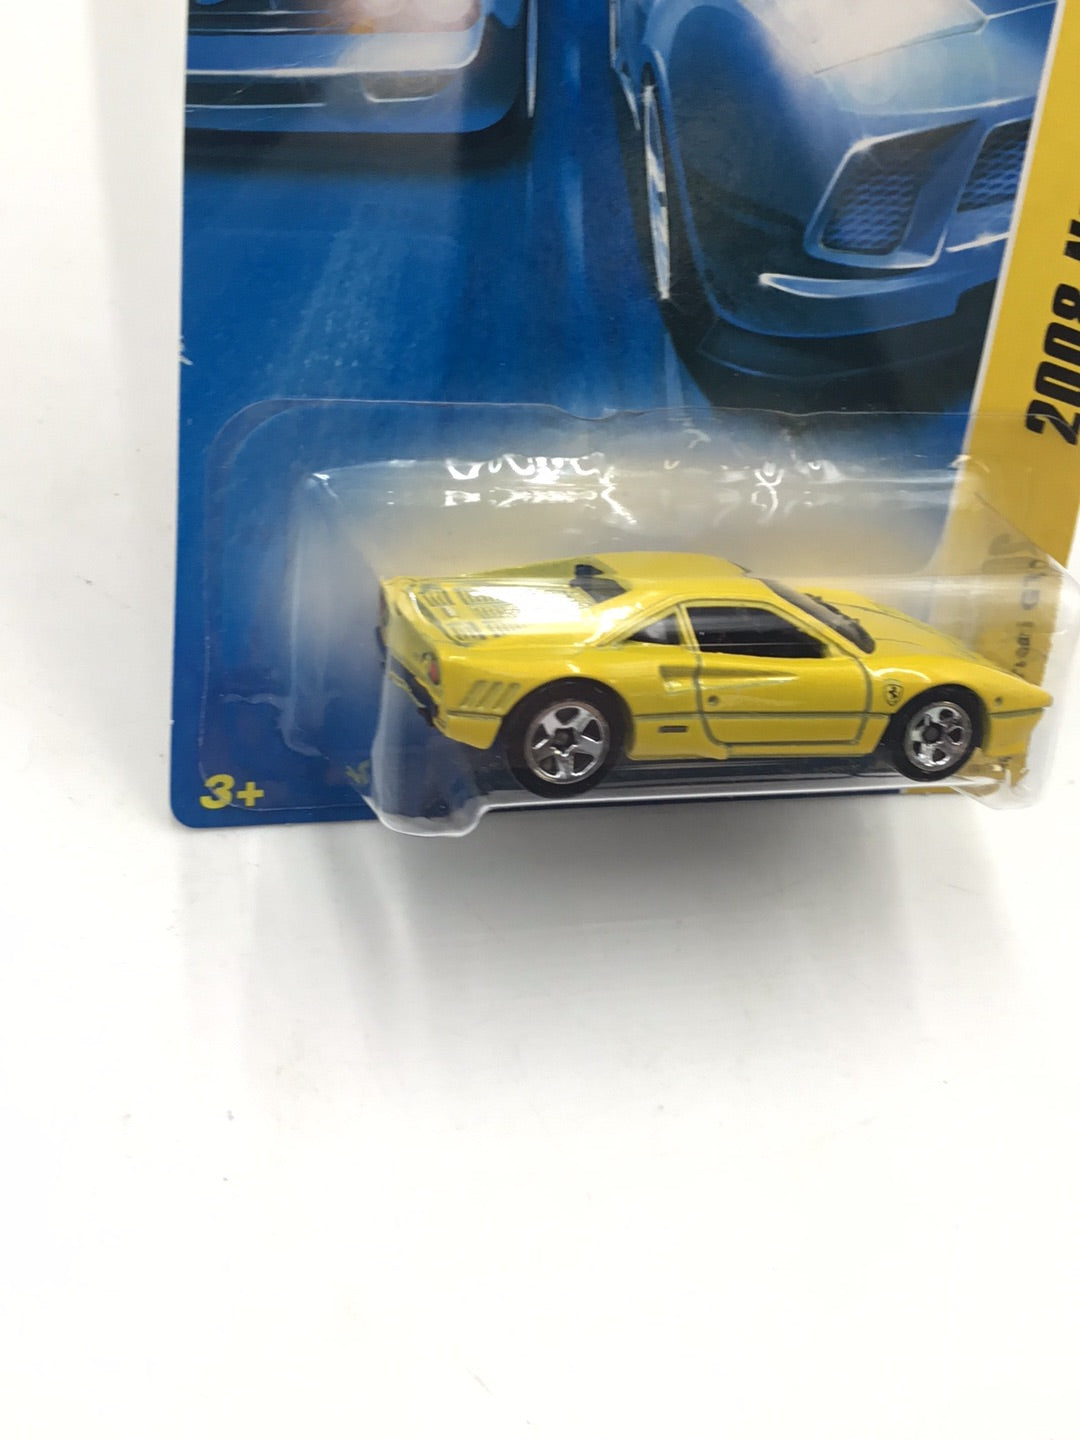 2008 Hot wheels #38 GTO Ferrari yellow PP5